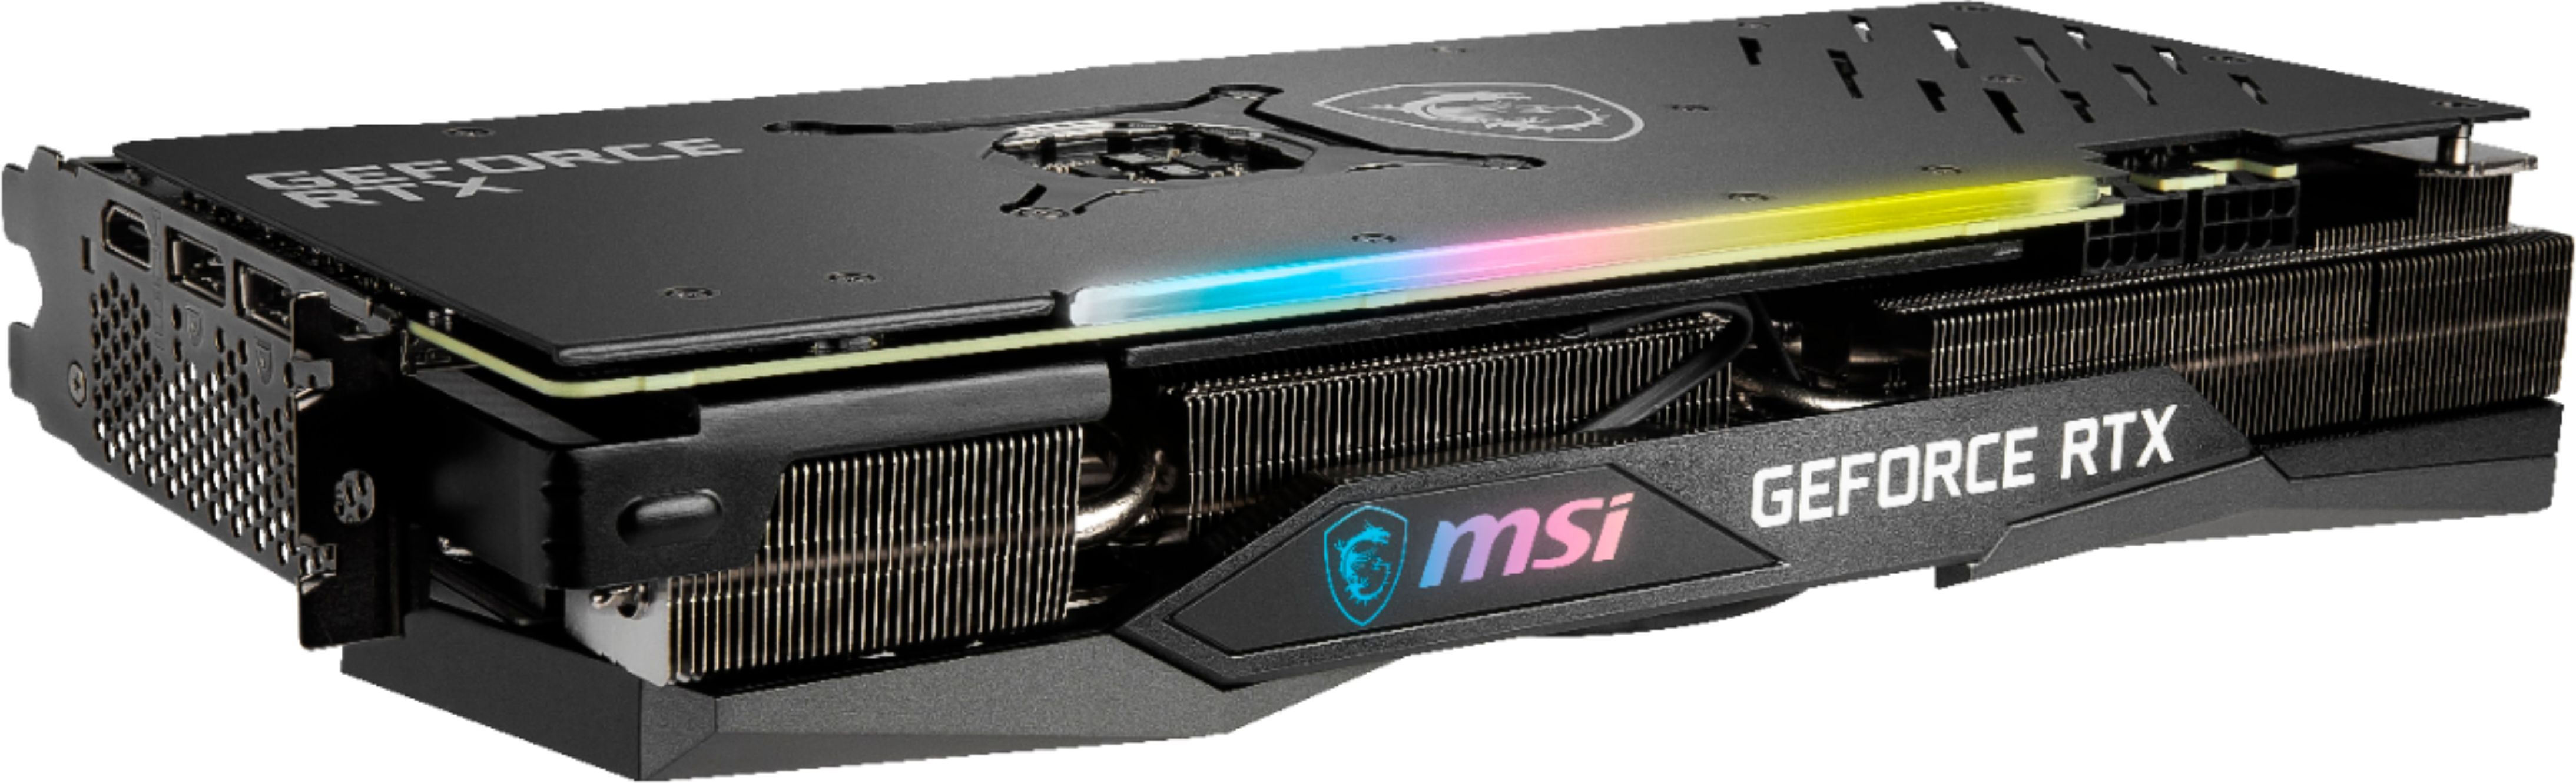 MSI - NVIDIA Geforce RTX 3070 Gaming Z Trio LHR 8GB GDDR6